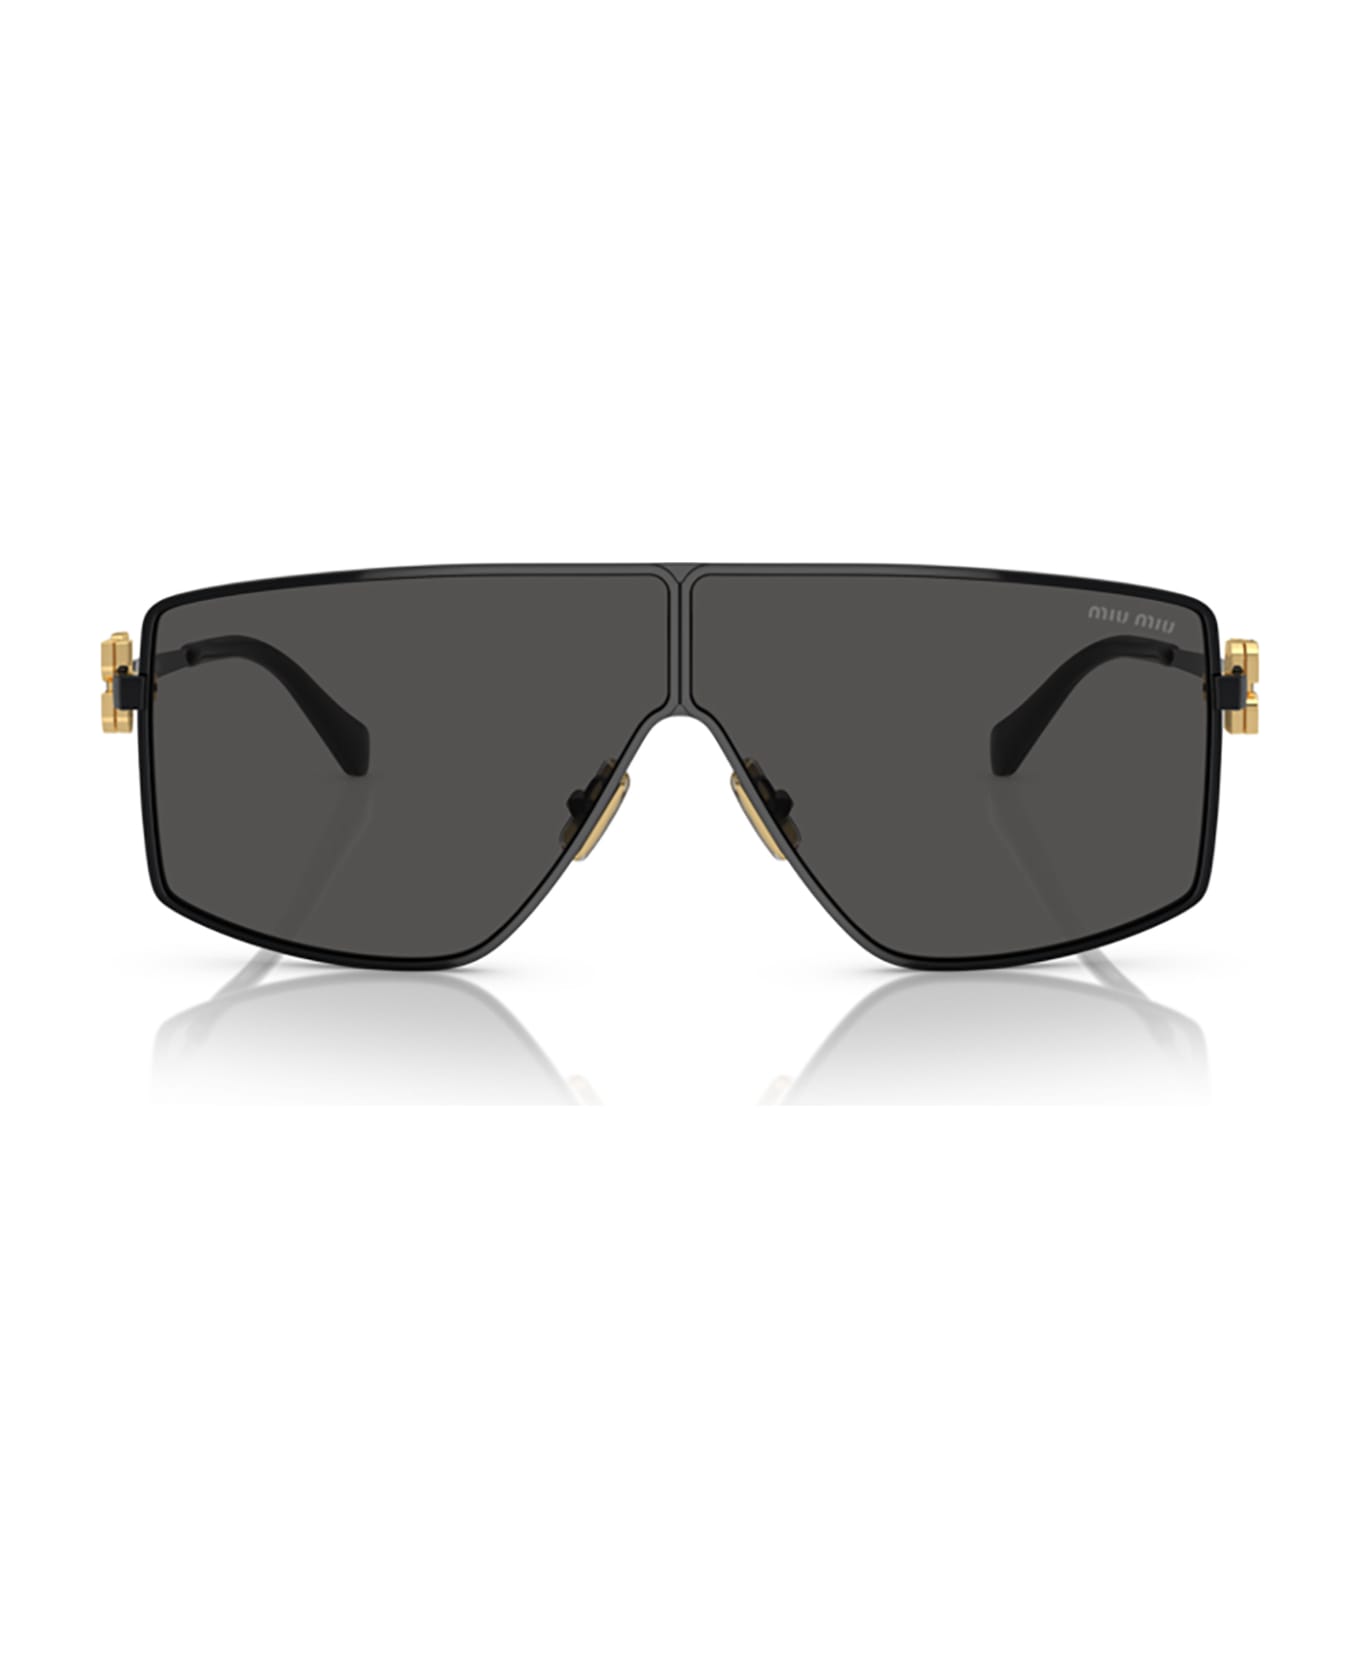 Miu Miu Eyewear Mu 51zs Black Sunglasses - Black